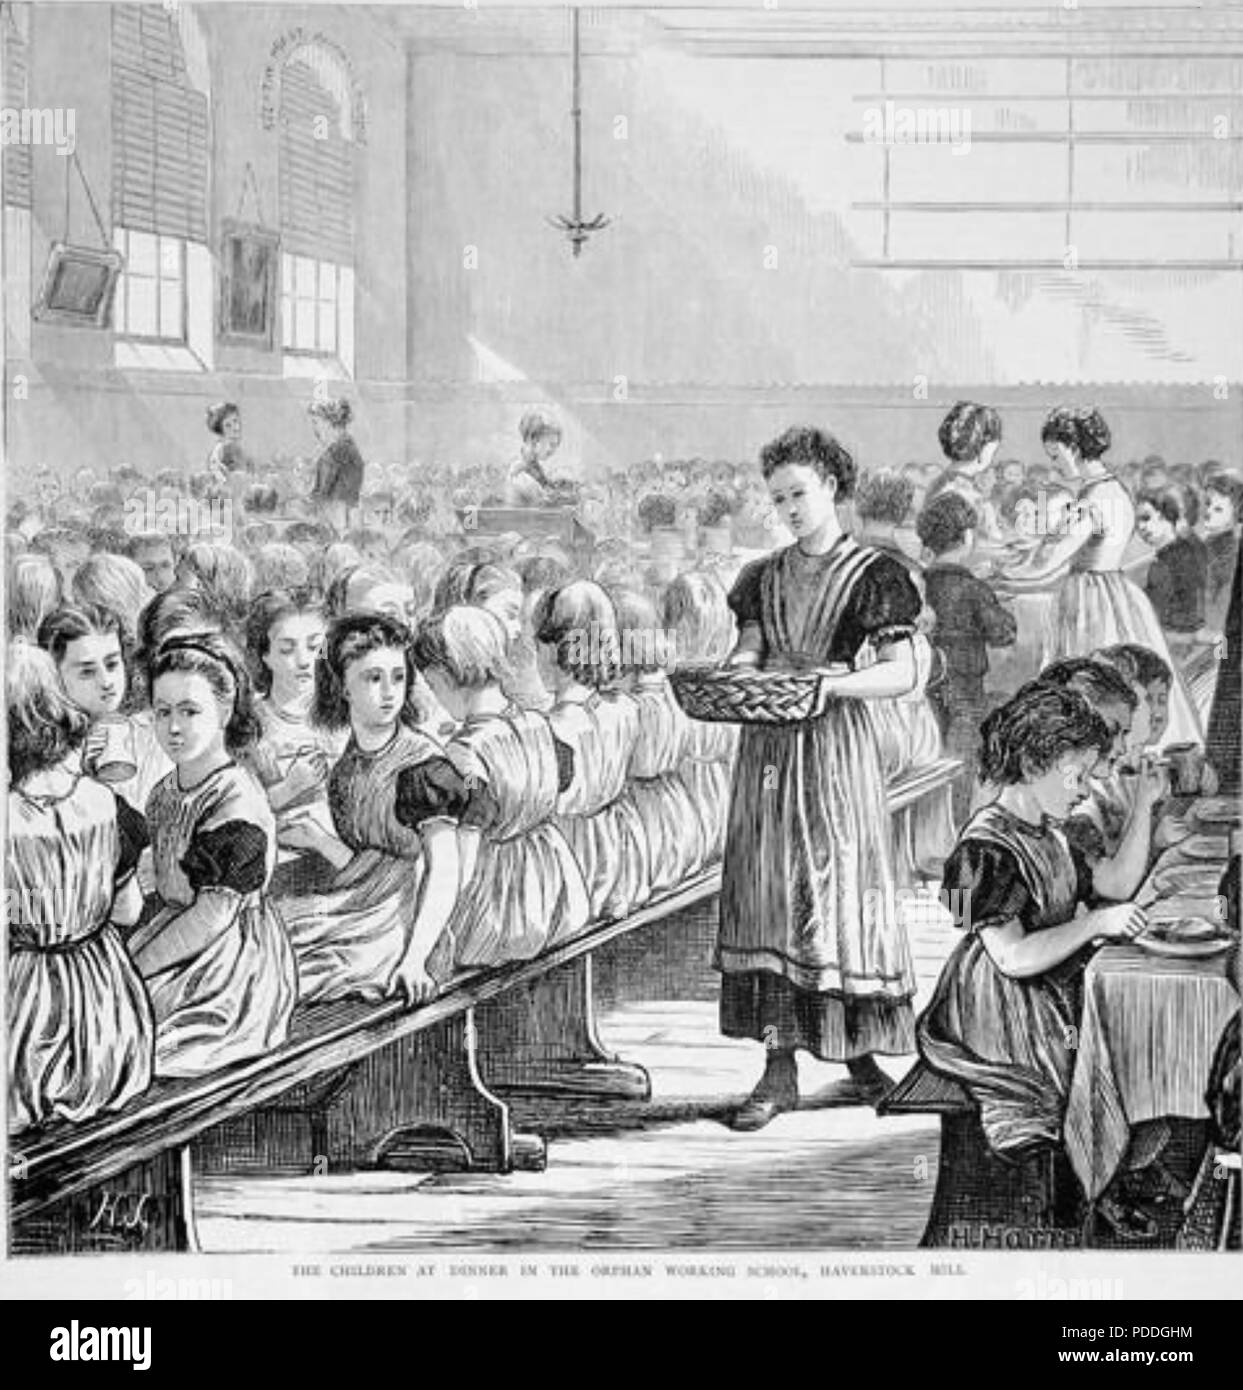 ORPHAN WORKING SCHOOL, Maitland Park, Haverstock Hill, London,1870 Stock Photo